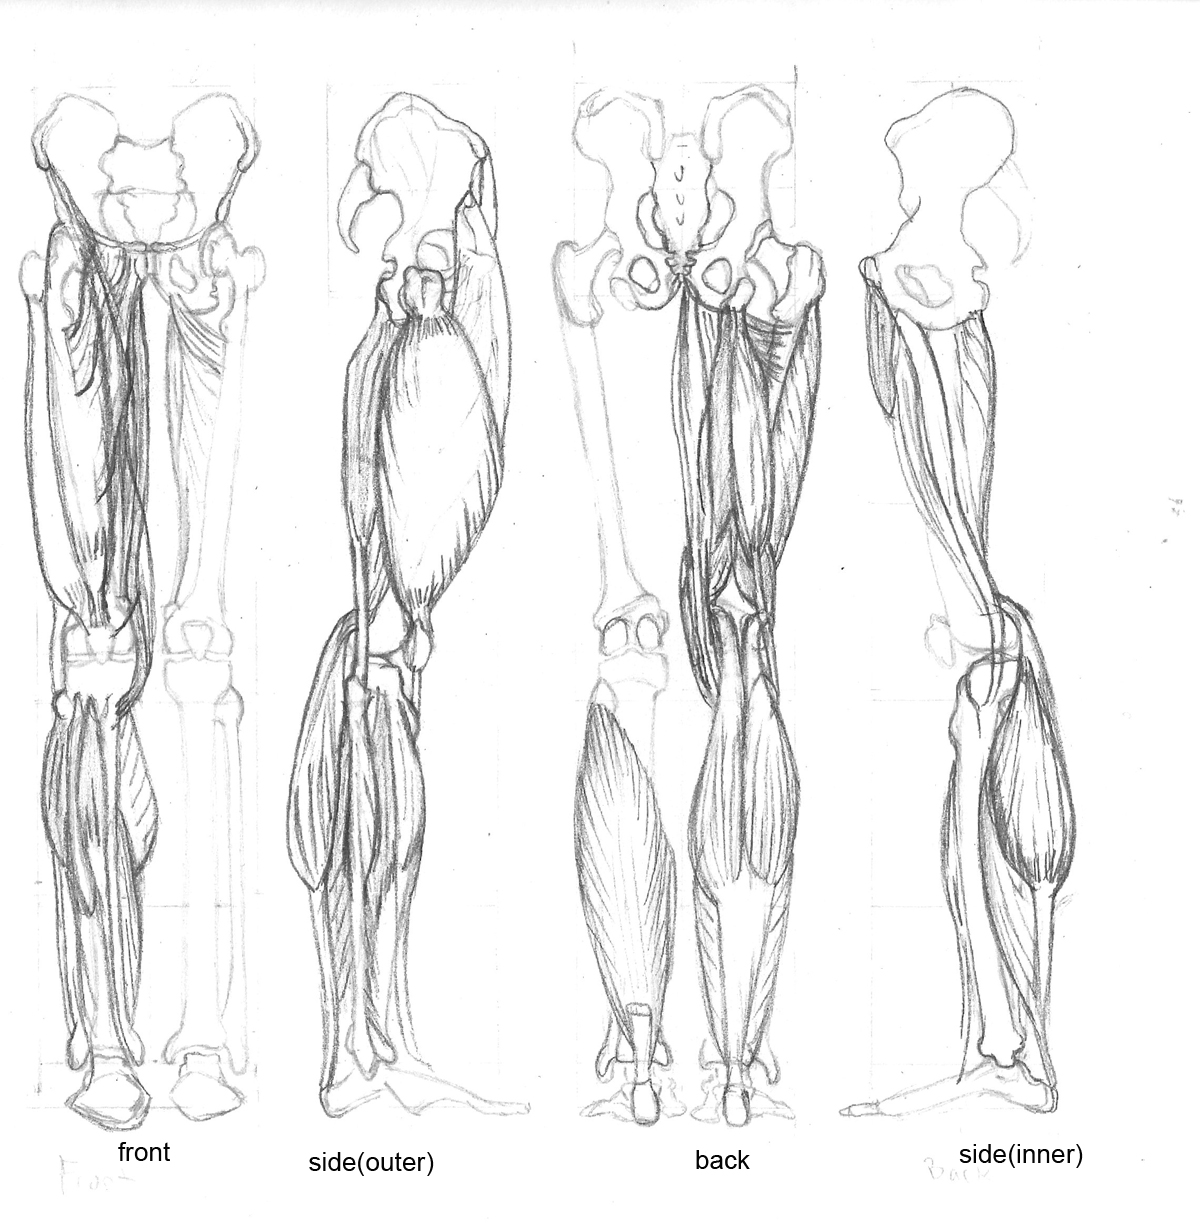 bones of leg